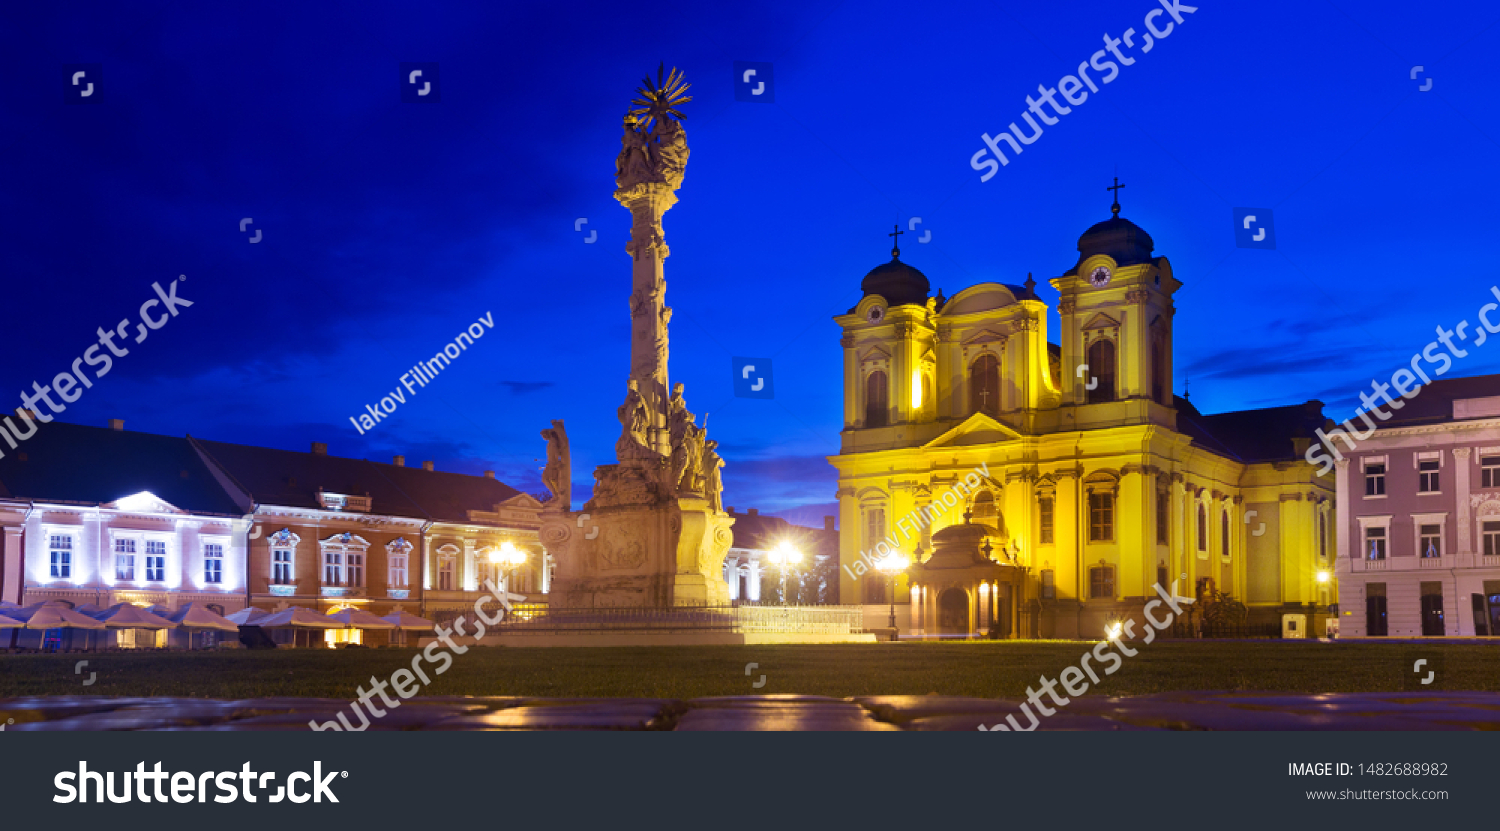 Illuminated Unirii Square with Roman Catholic Dome at dusk, Romania #1482688982